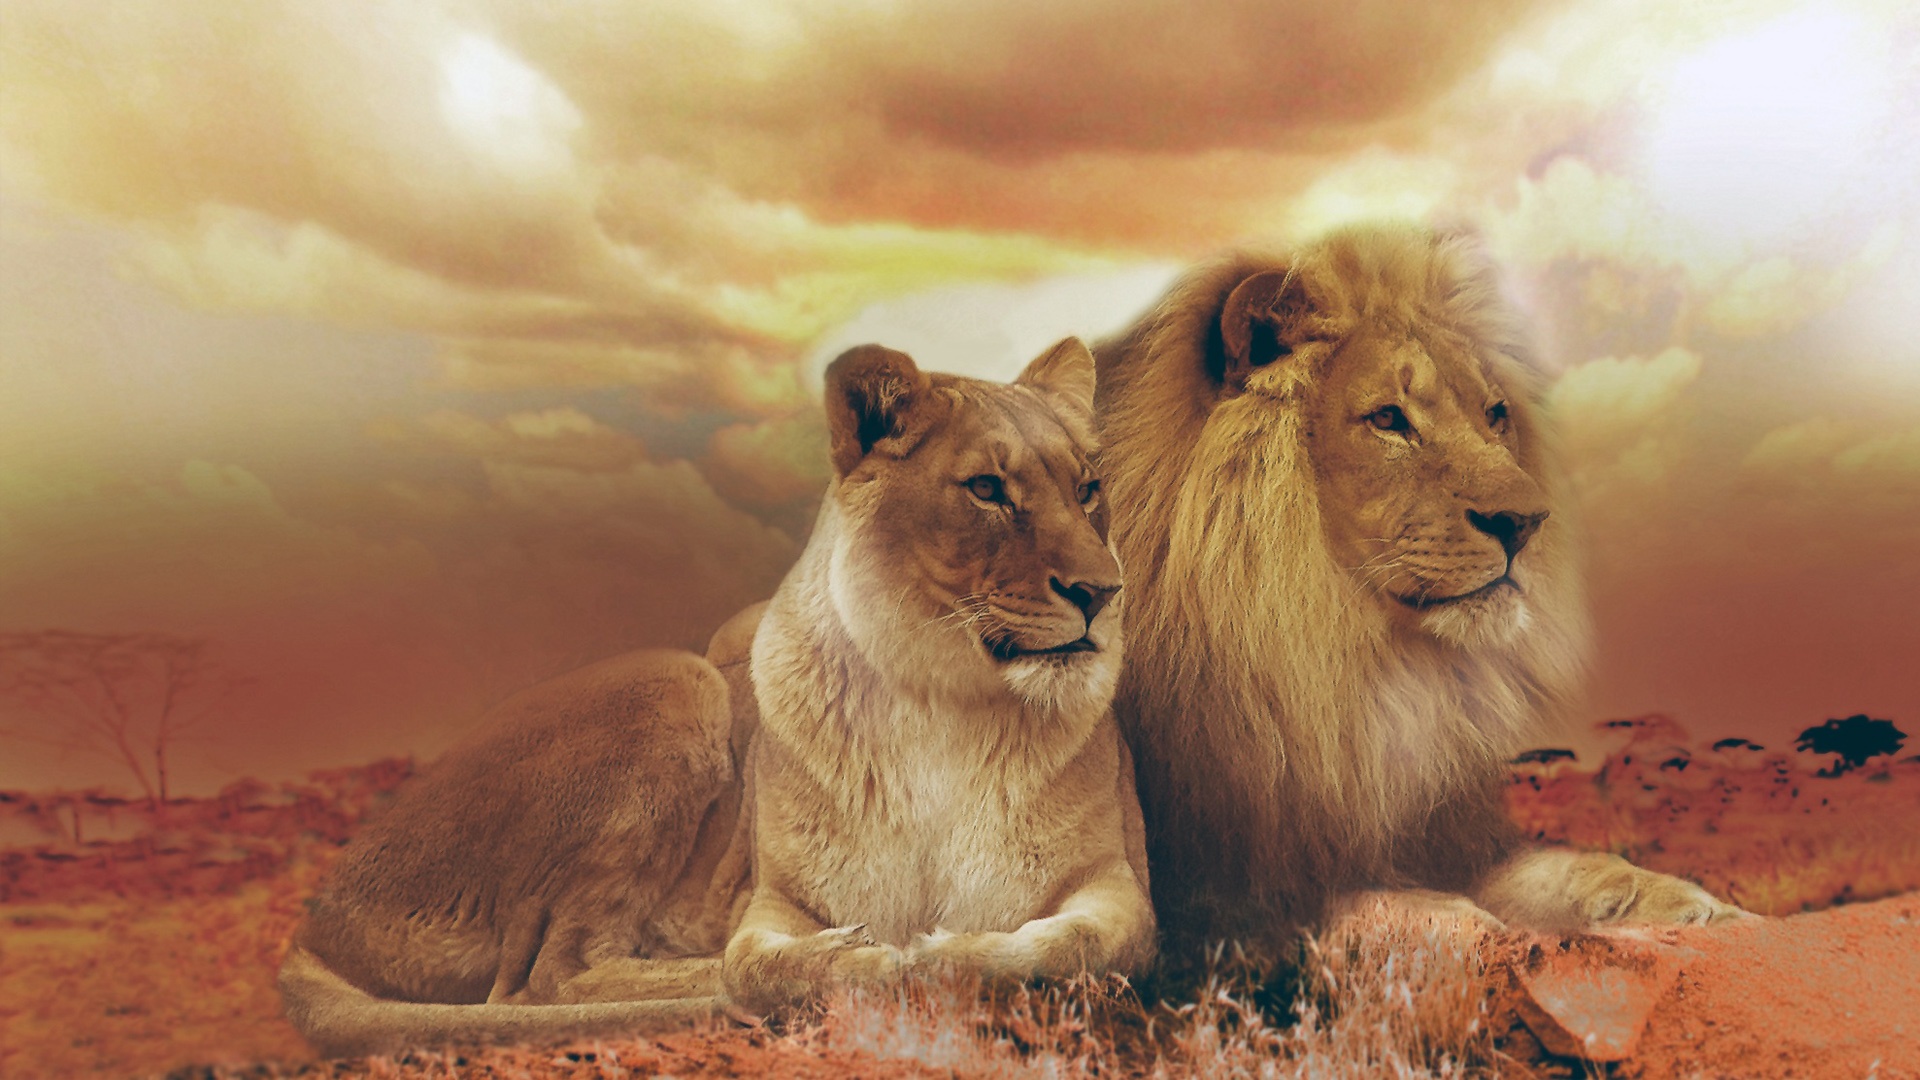 376998 descargar imagen león, pareja, animales, áfrica, atardecer, gatos: fondos de pantalla y protectores de pantalla gratis